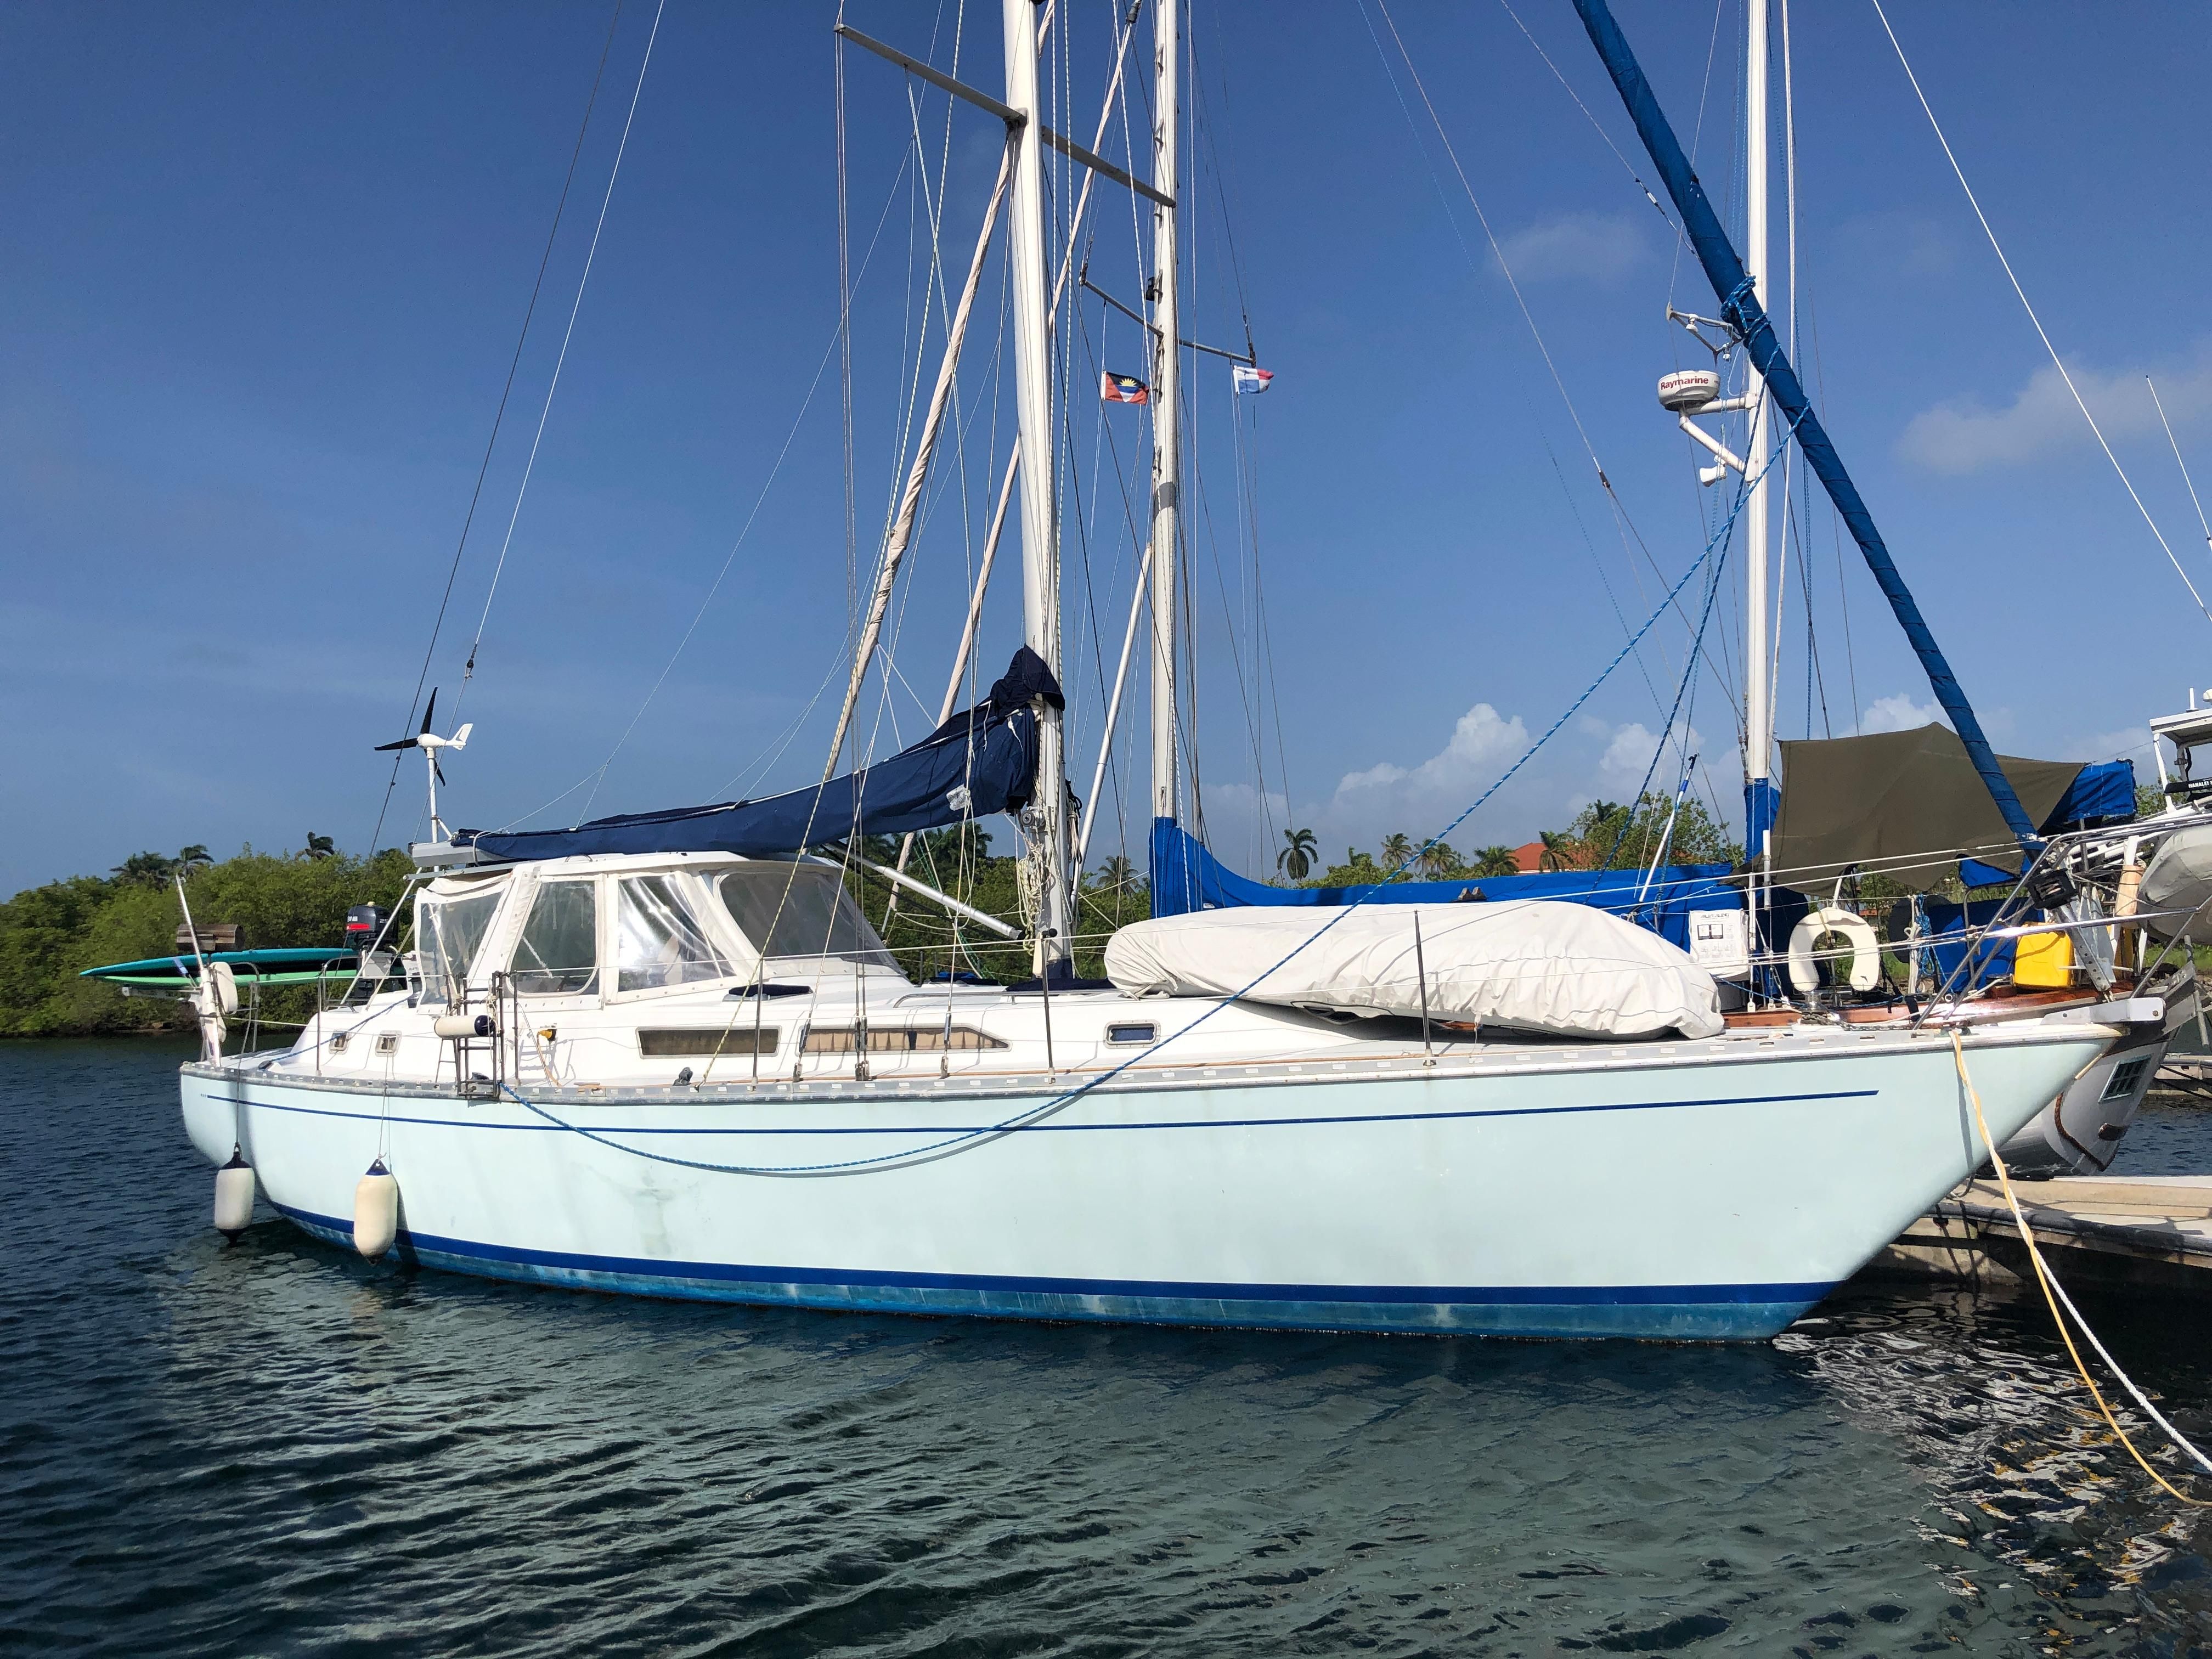 50 ft sailboat for sale uk